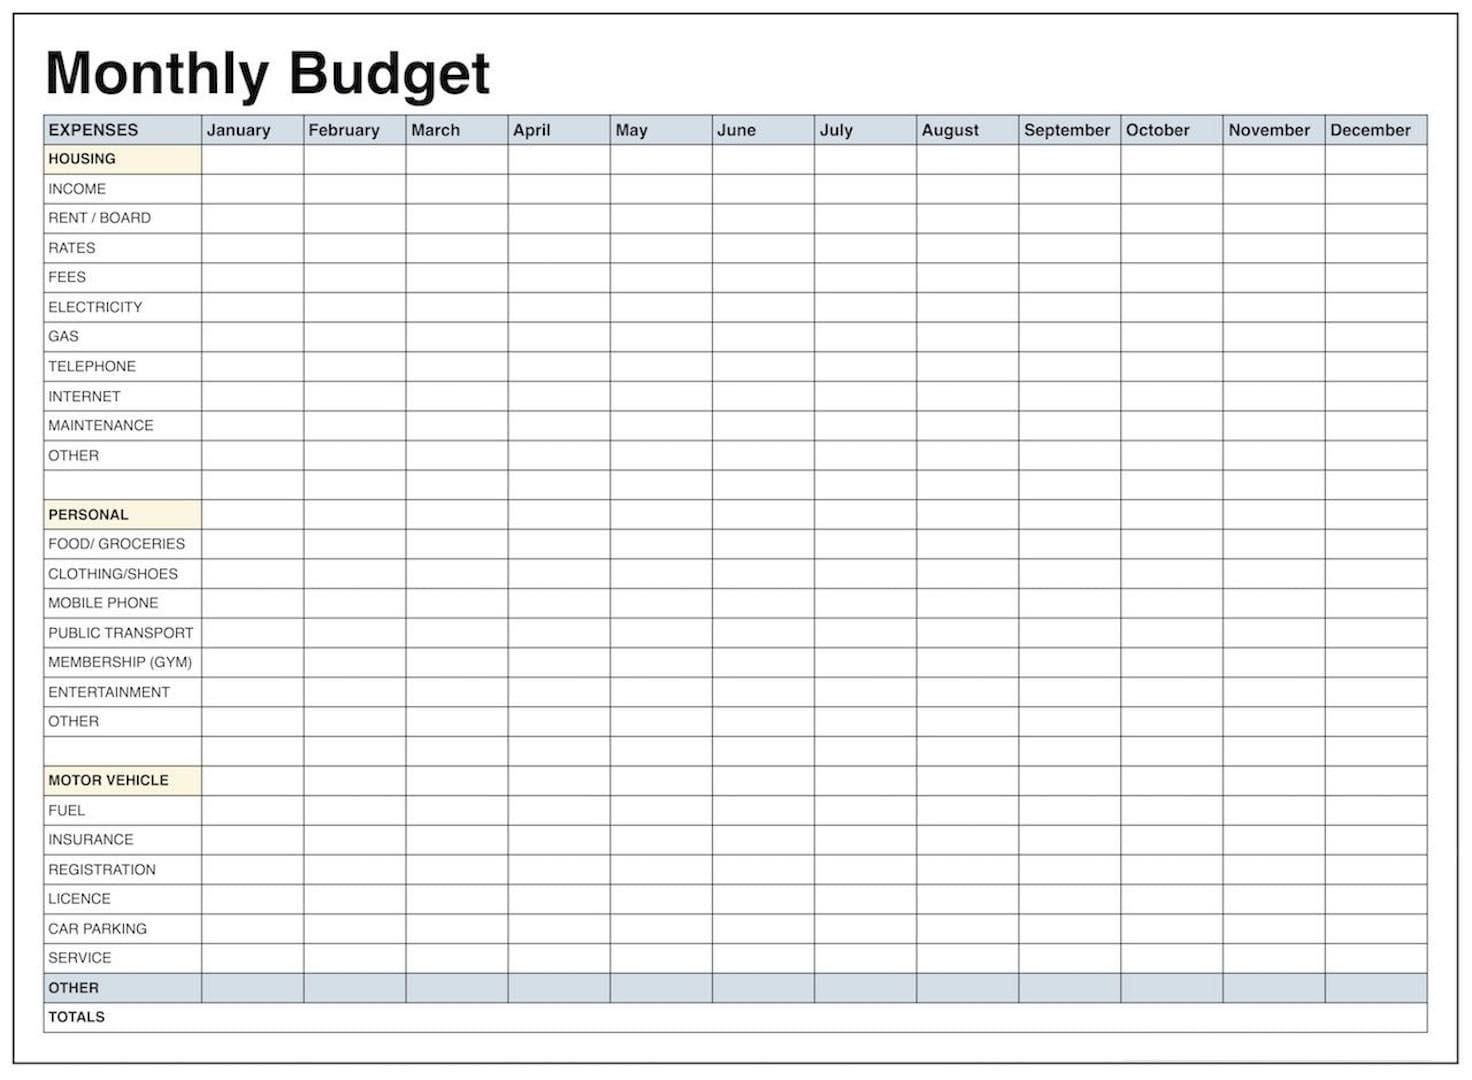 001 Blank Budget Worksheet Stunning Pdf Printable Monthly Household As Well As Blank Budget Worksheet